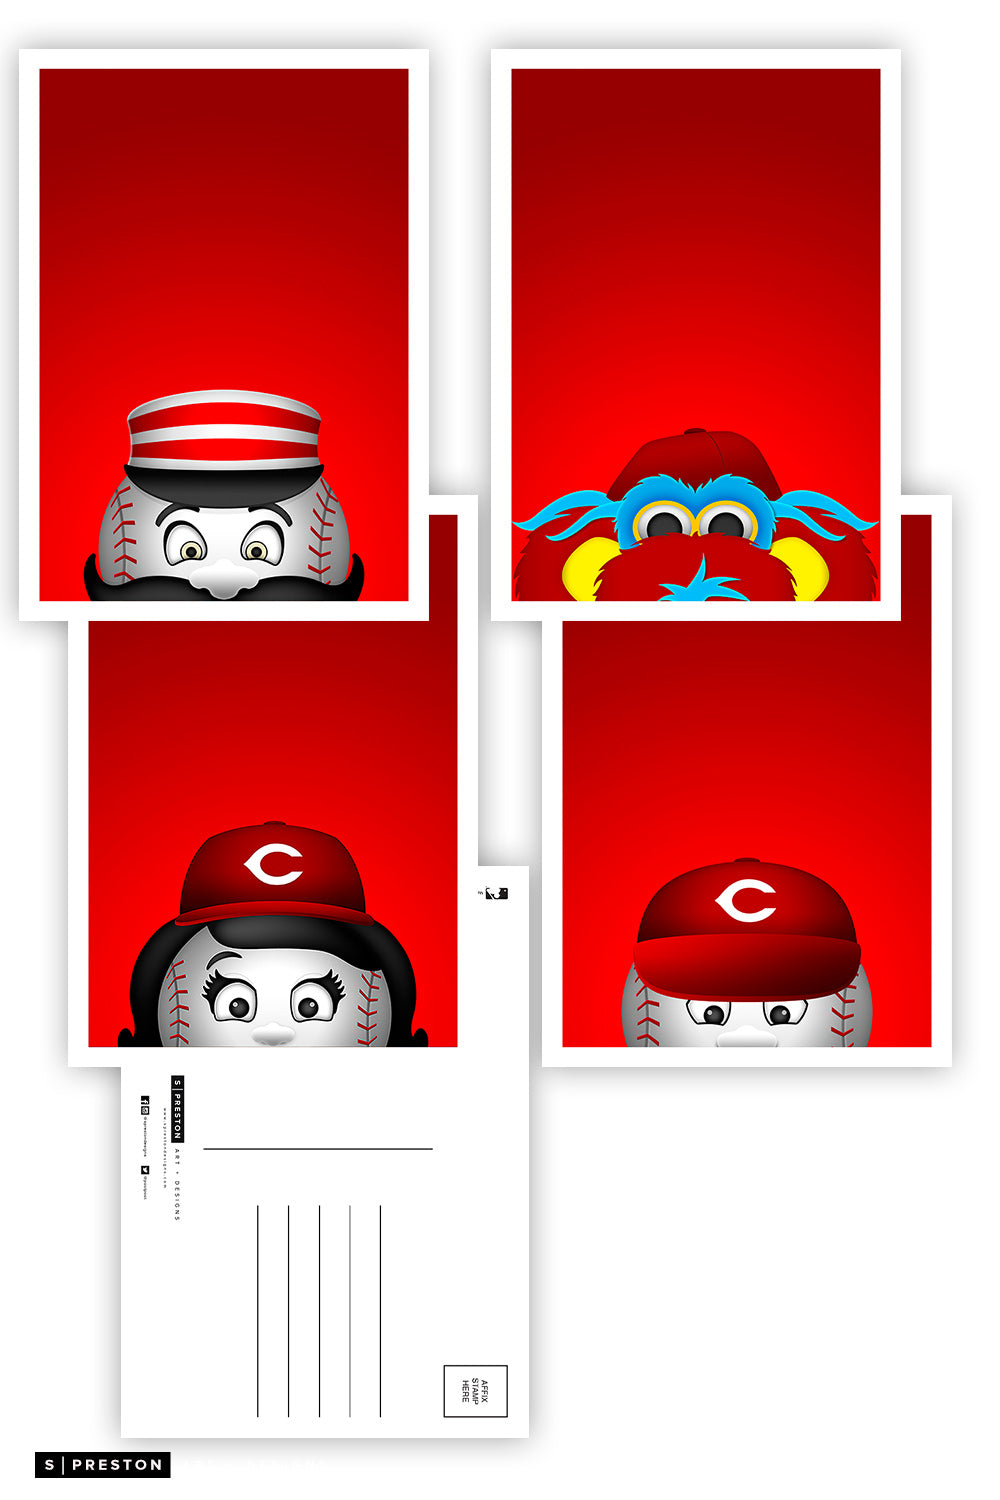 Minimalist Reds Mascots Postcard Set Cincinnati Reds - S. Preston